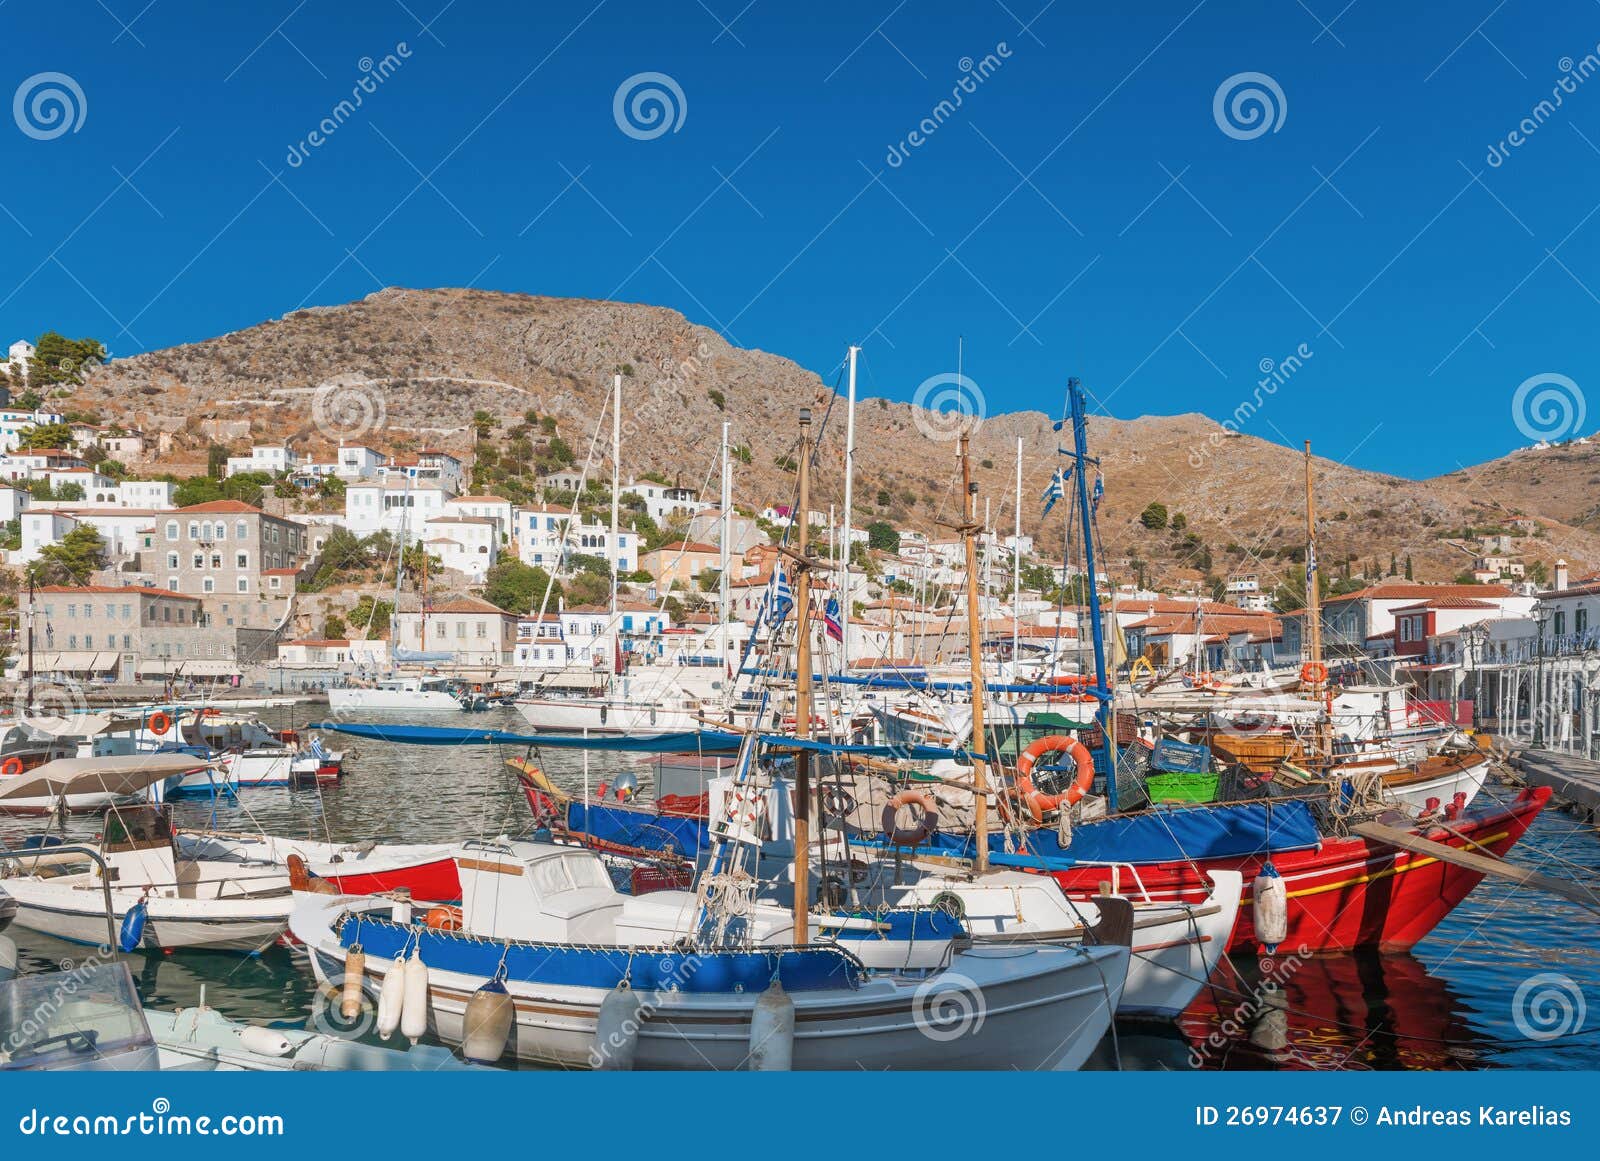 the port of hydra, greece